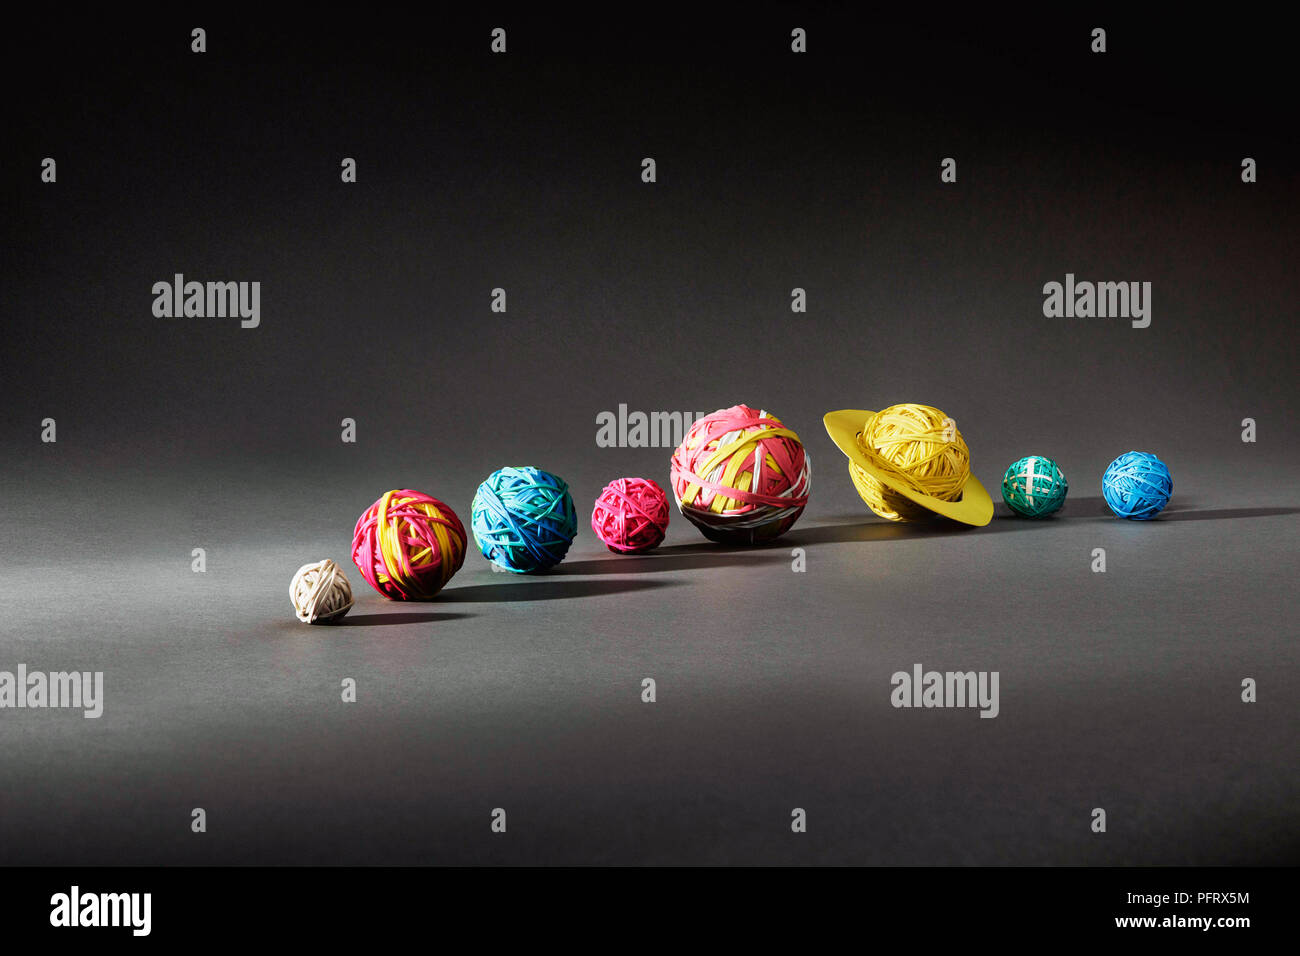 Steo by step rubber band planets, mercury, venus, earth, mars, jupiter, saturn, uranus, netune, Stock Photo